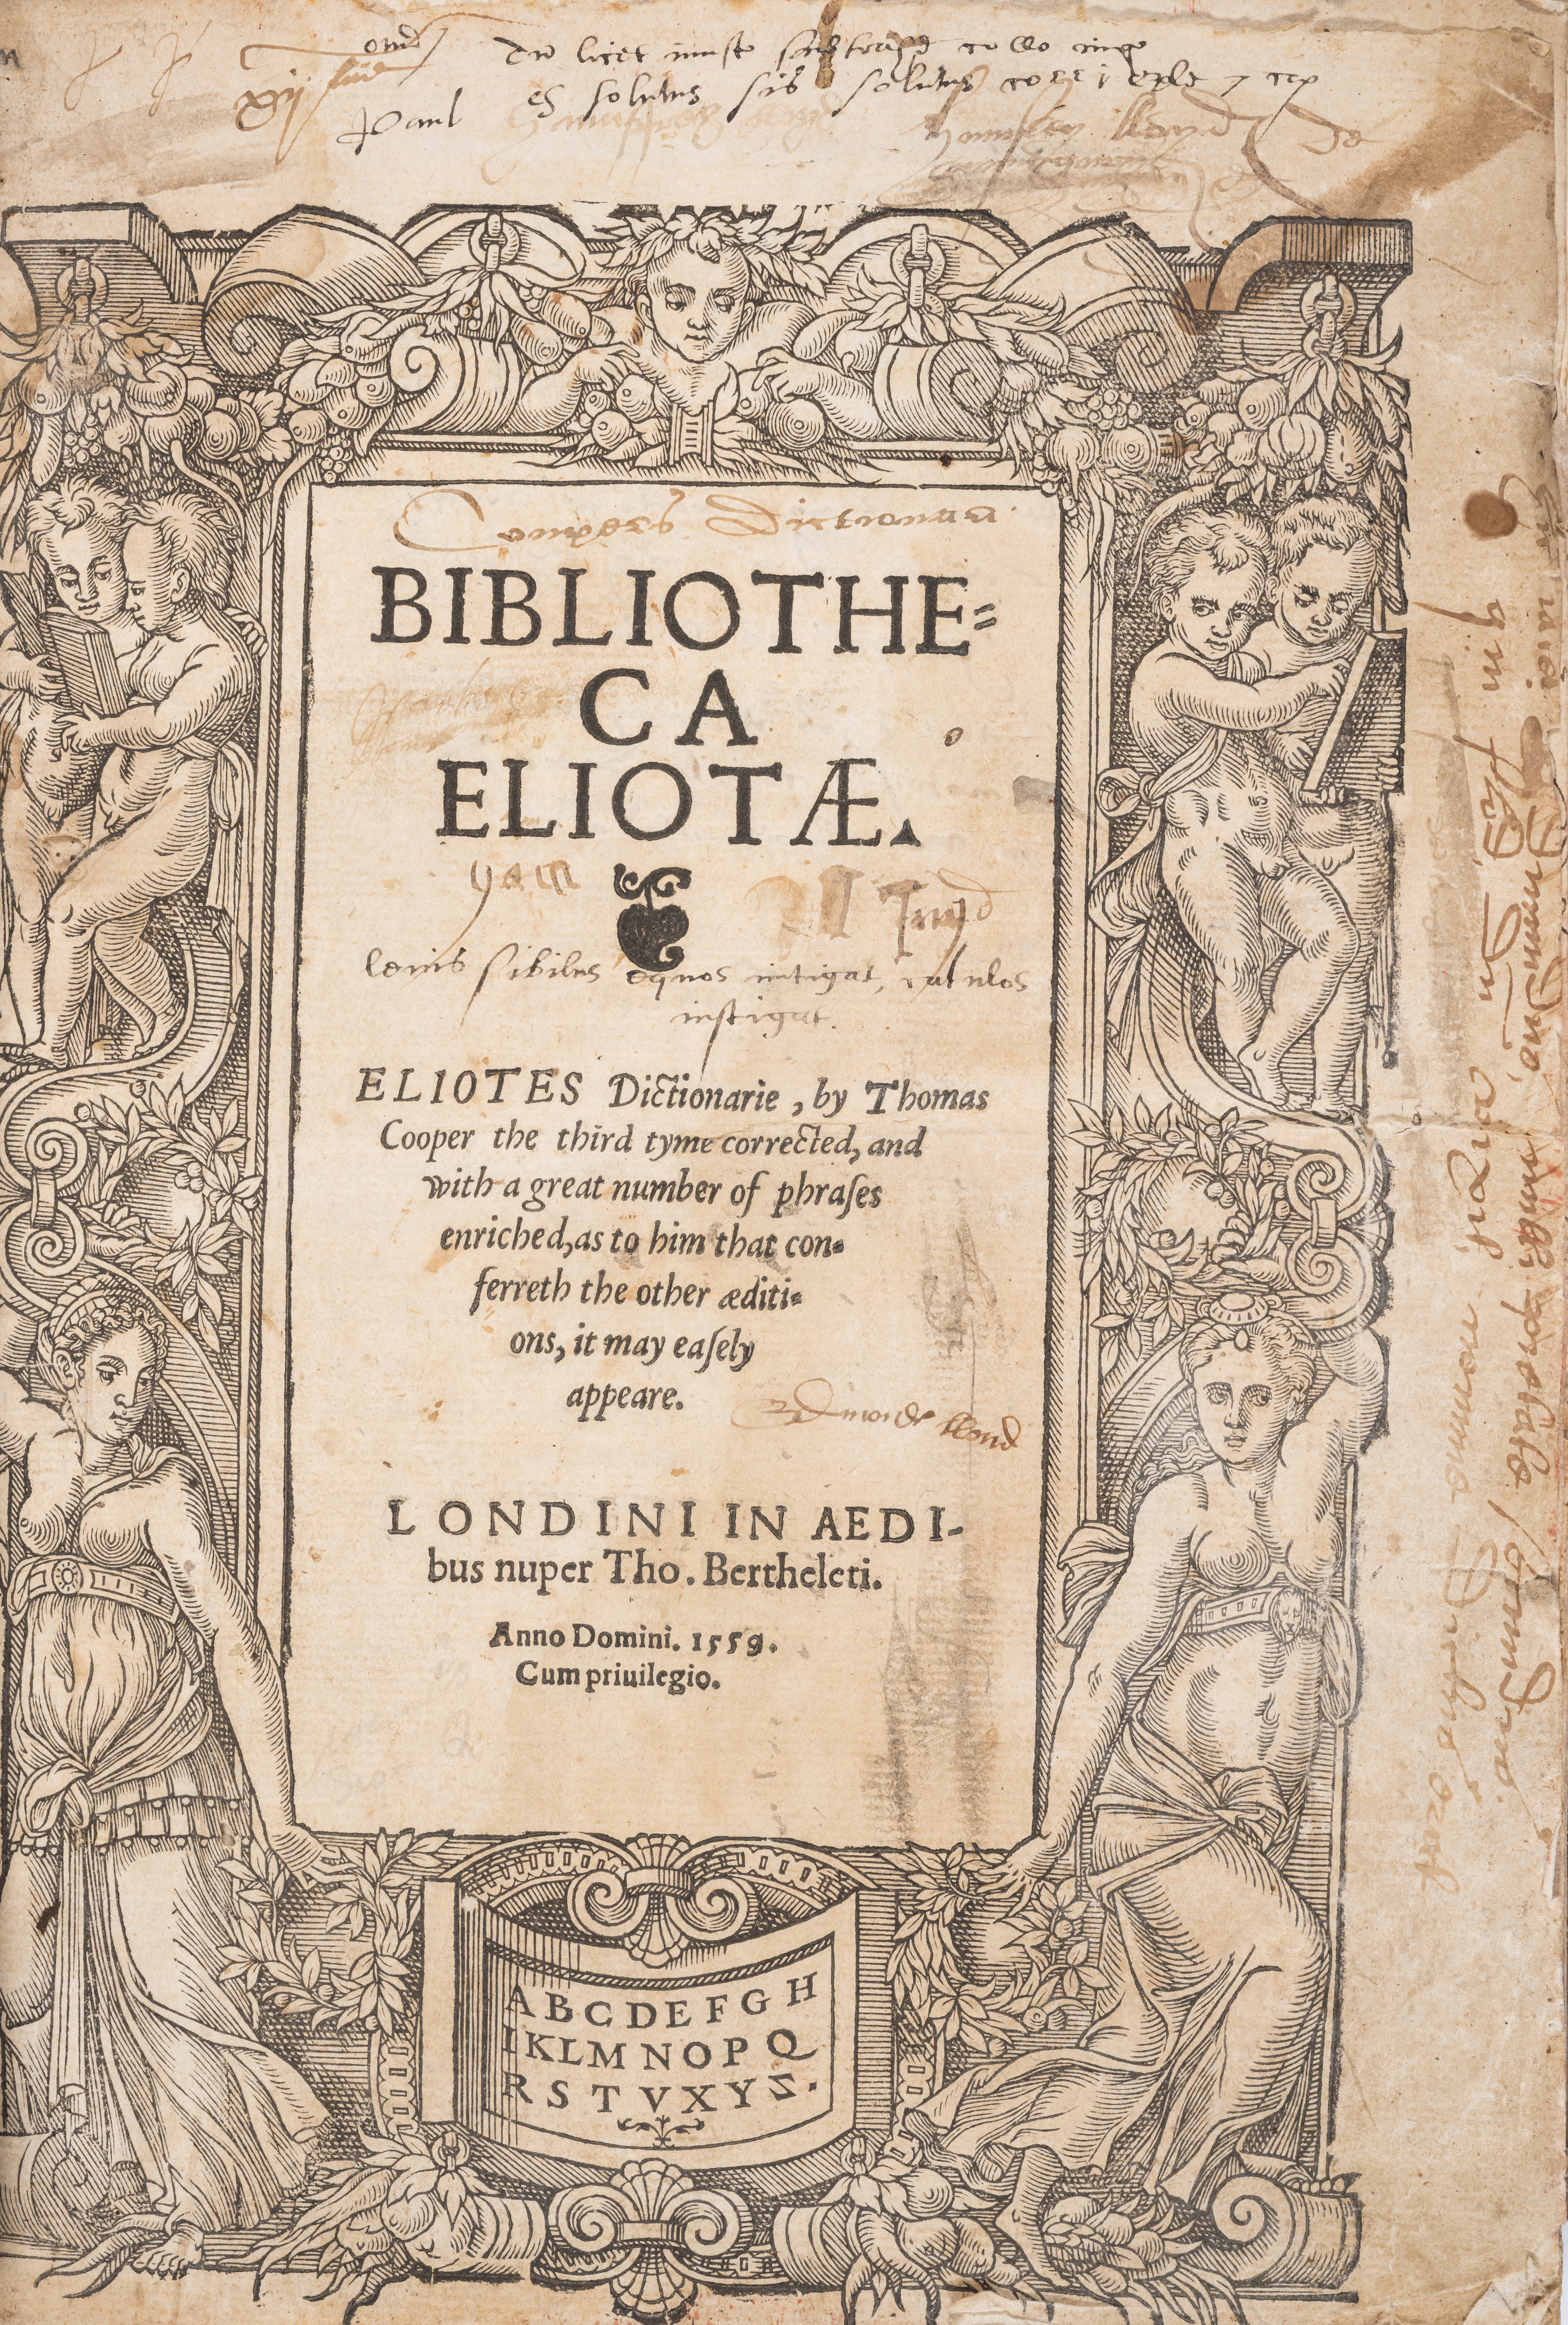 Dictionary.- Elyot (Sir Thomas) Bibliotheca Eliotæ. Eliotes dictionarie, third edition, Thomas Be...